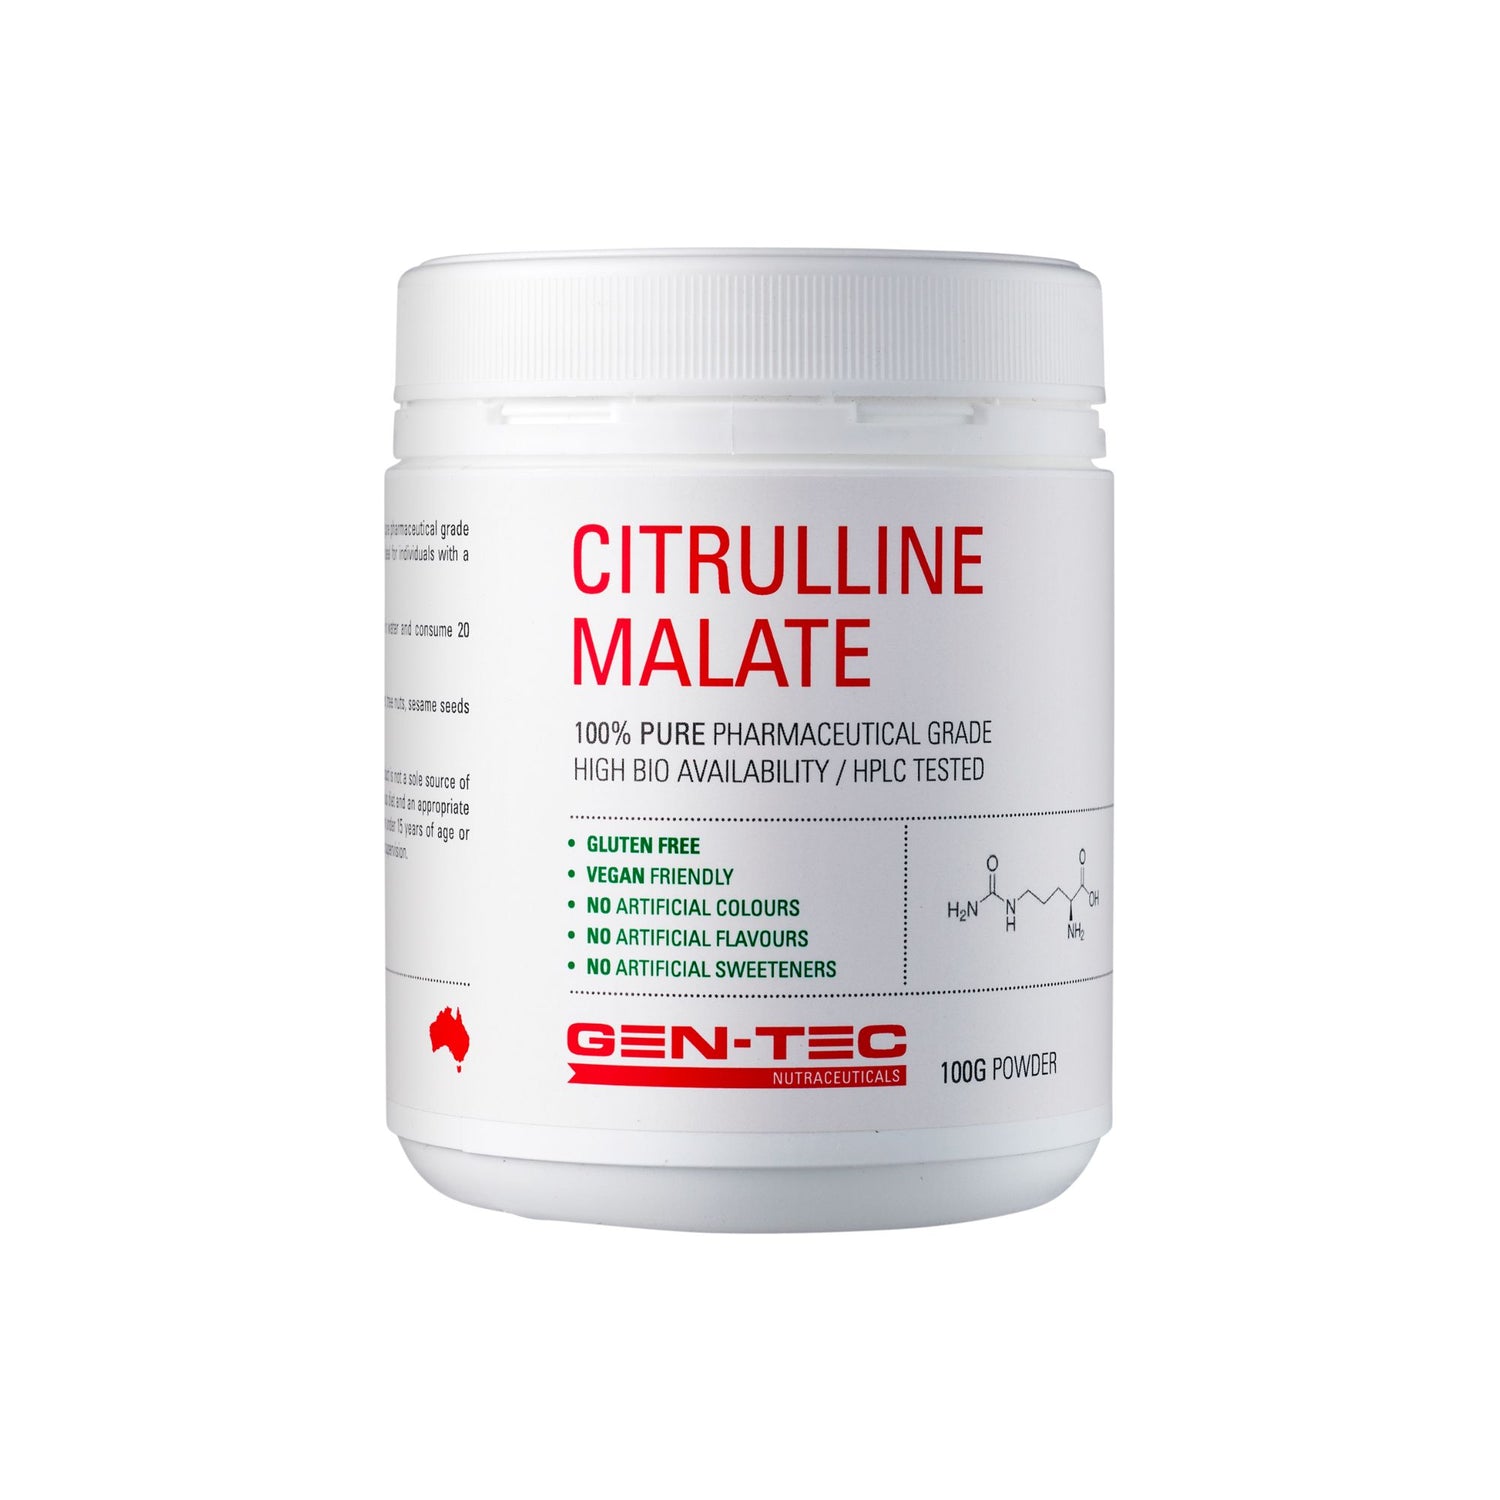 Gentec Citrulline Malate Nutraceuticals